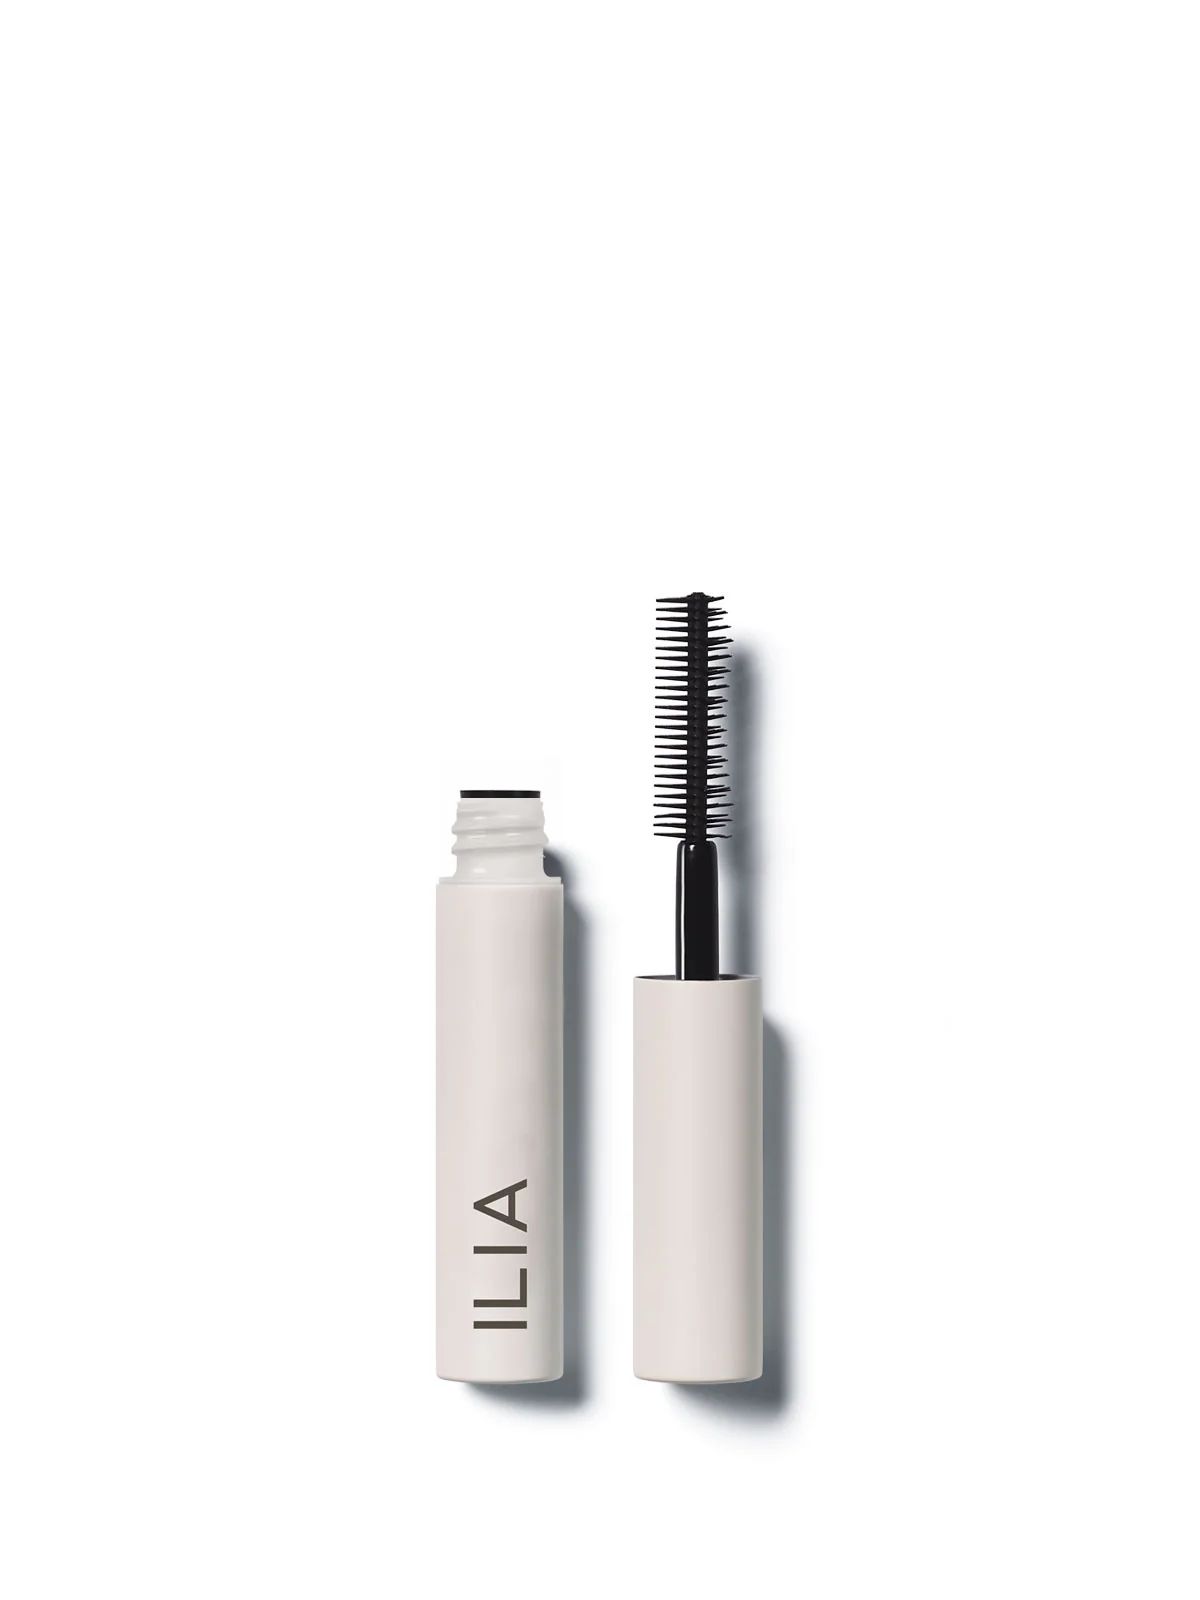 ILIA Limitless Lash Mascara - After Midnight - Mini - 0.1 oz | 3g - Clean, Natural Mascara | ILIA Beauty